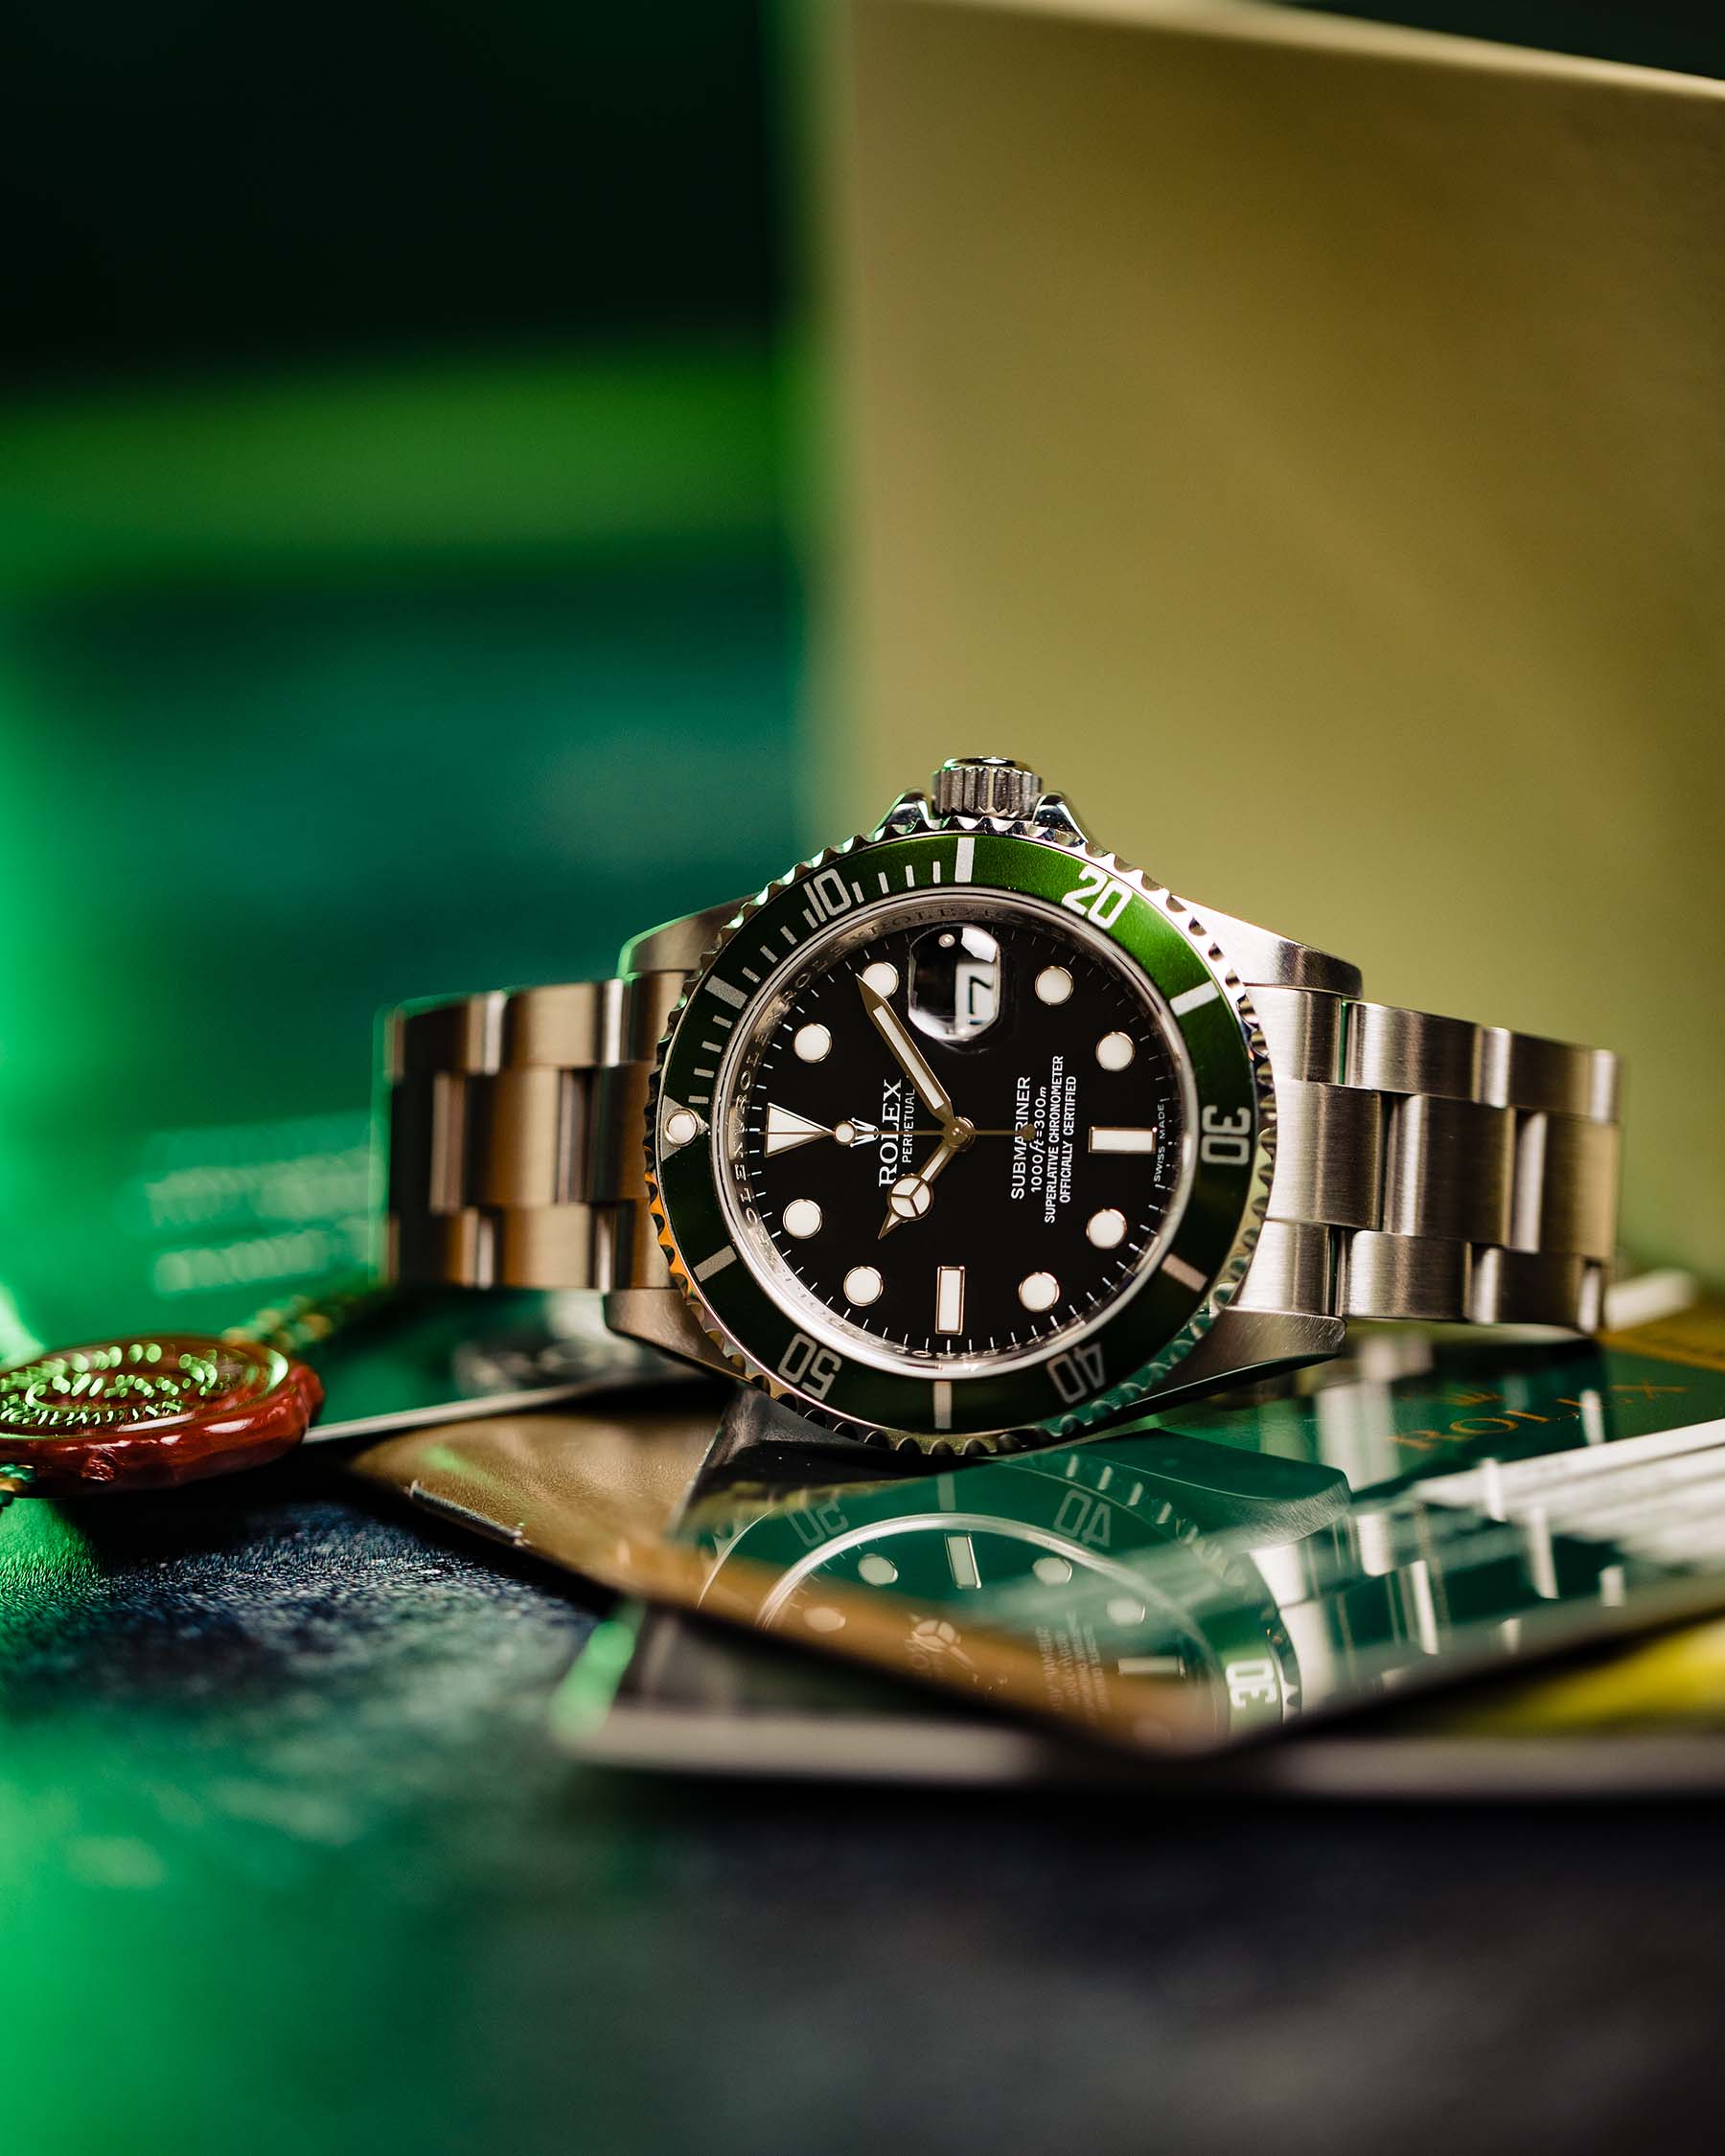 Rolex Submariner 16610LV Steel – The Keystone Watches